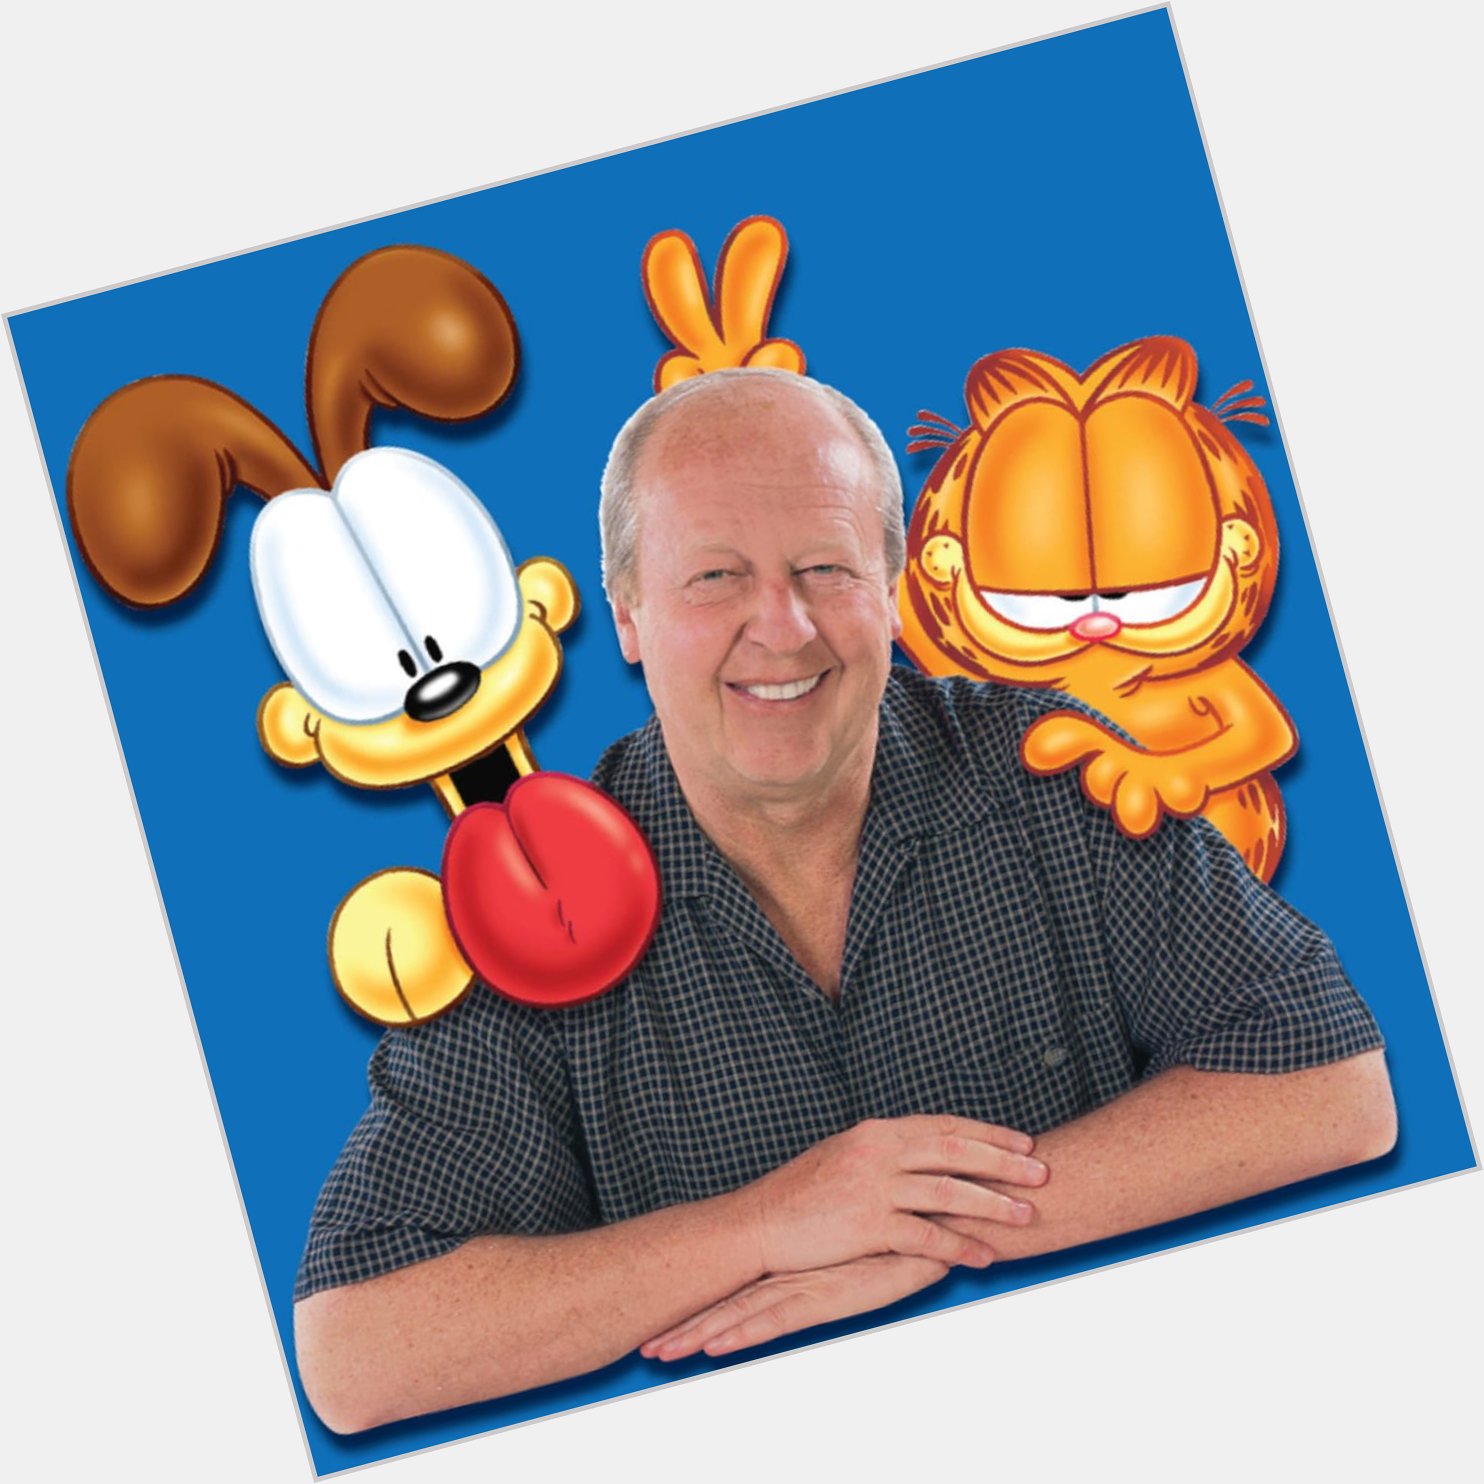 Happy 76th Birthday to Jim Davis! The creator of Garfield. 